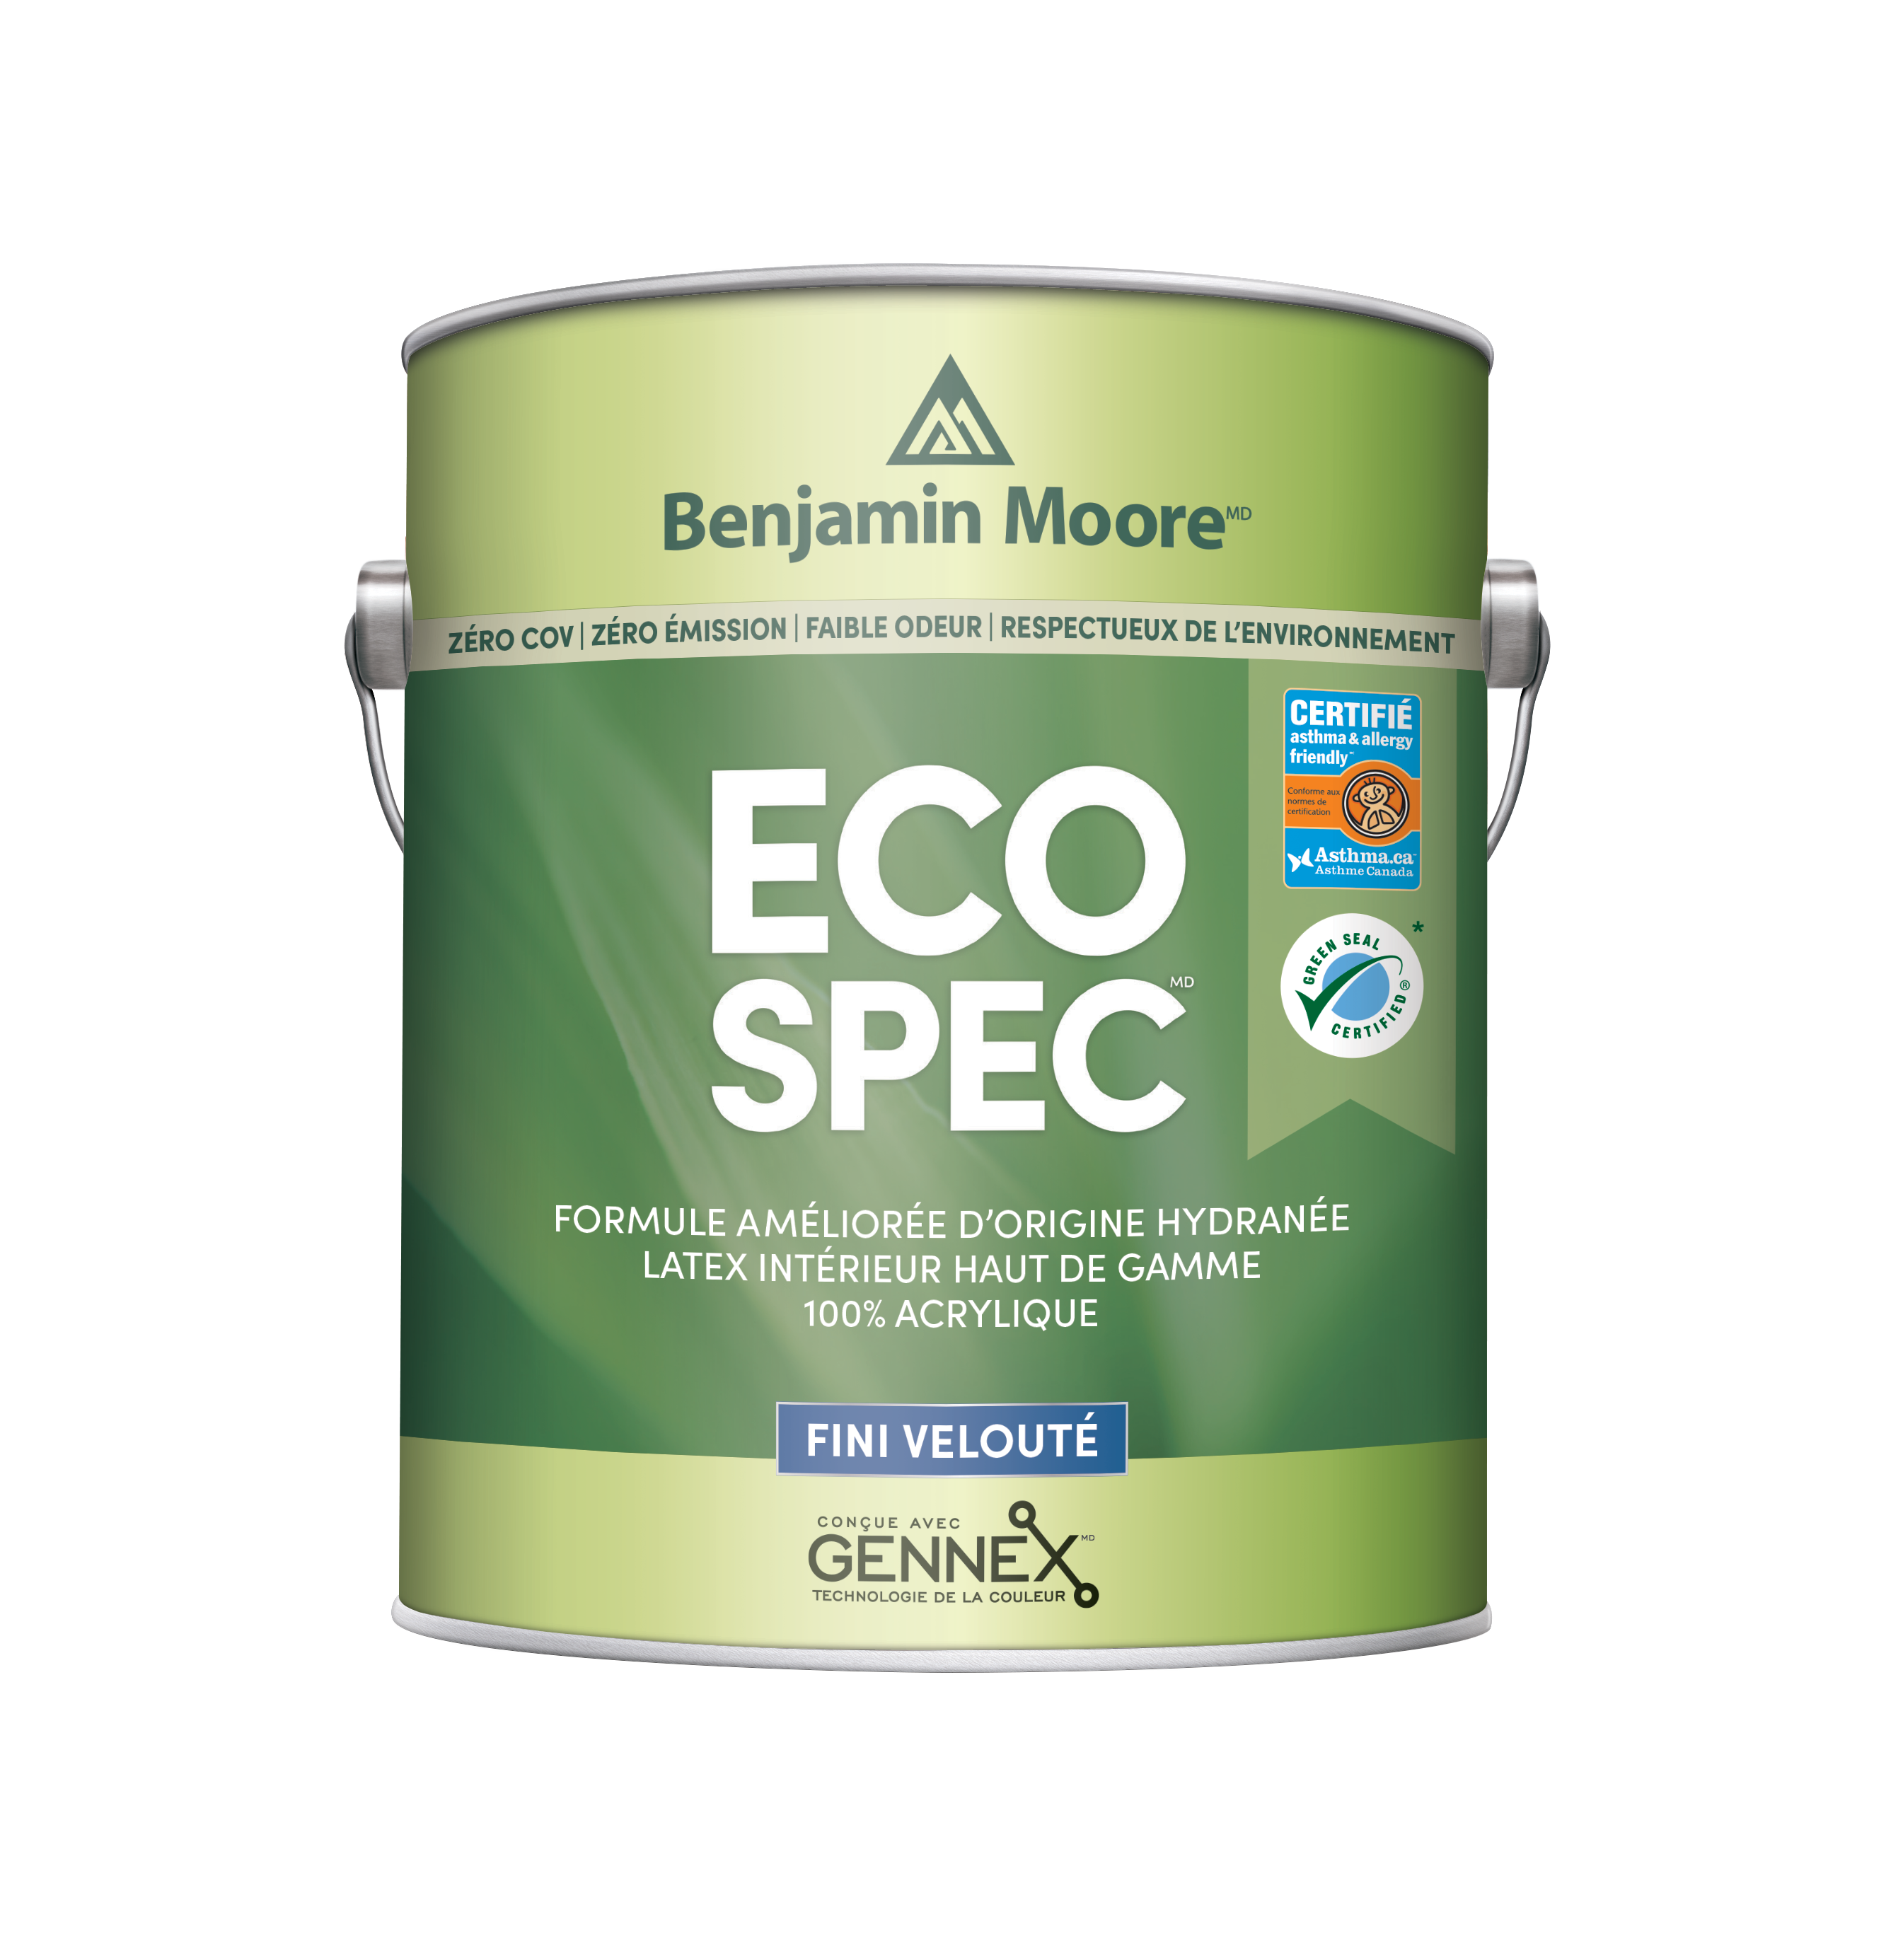 Eco Spec - Fini Velouté - Benjamin Moore